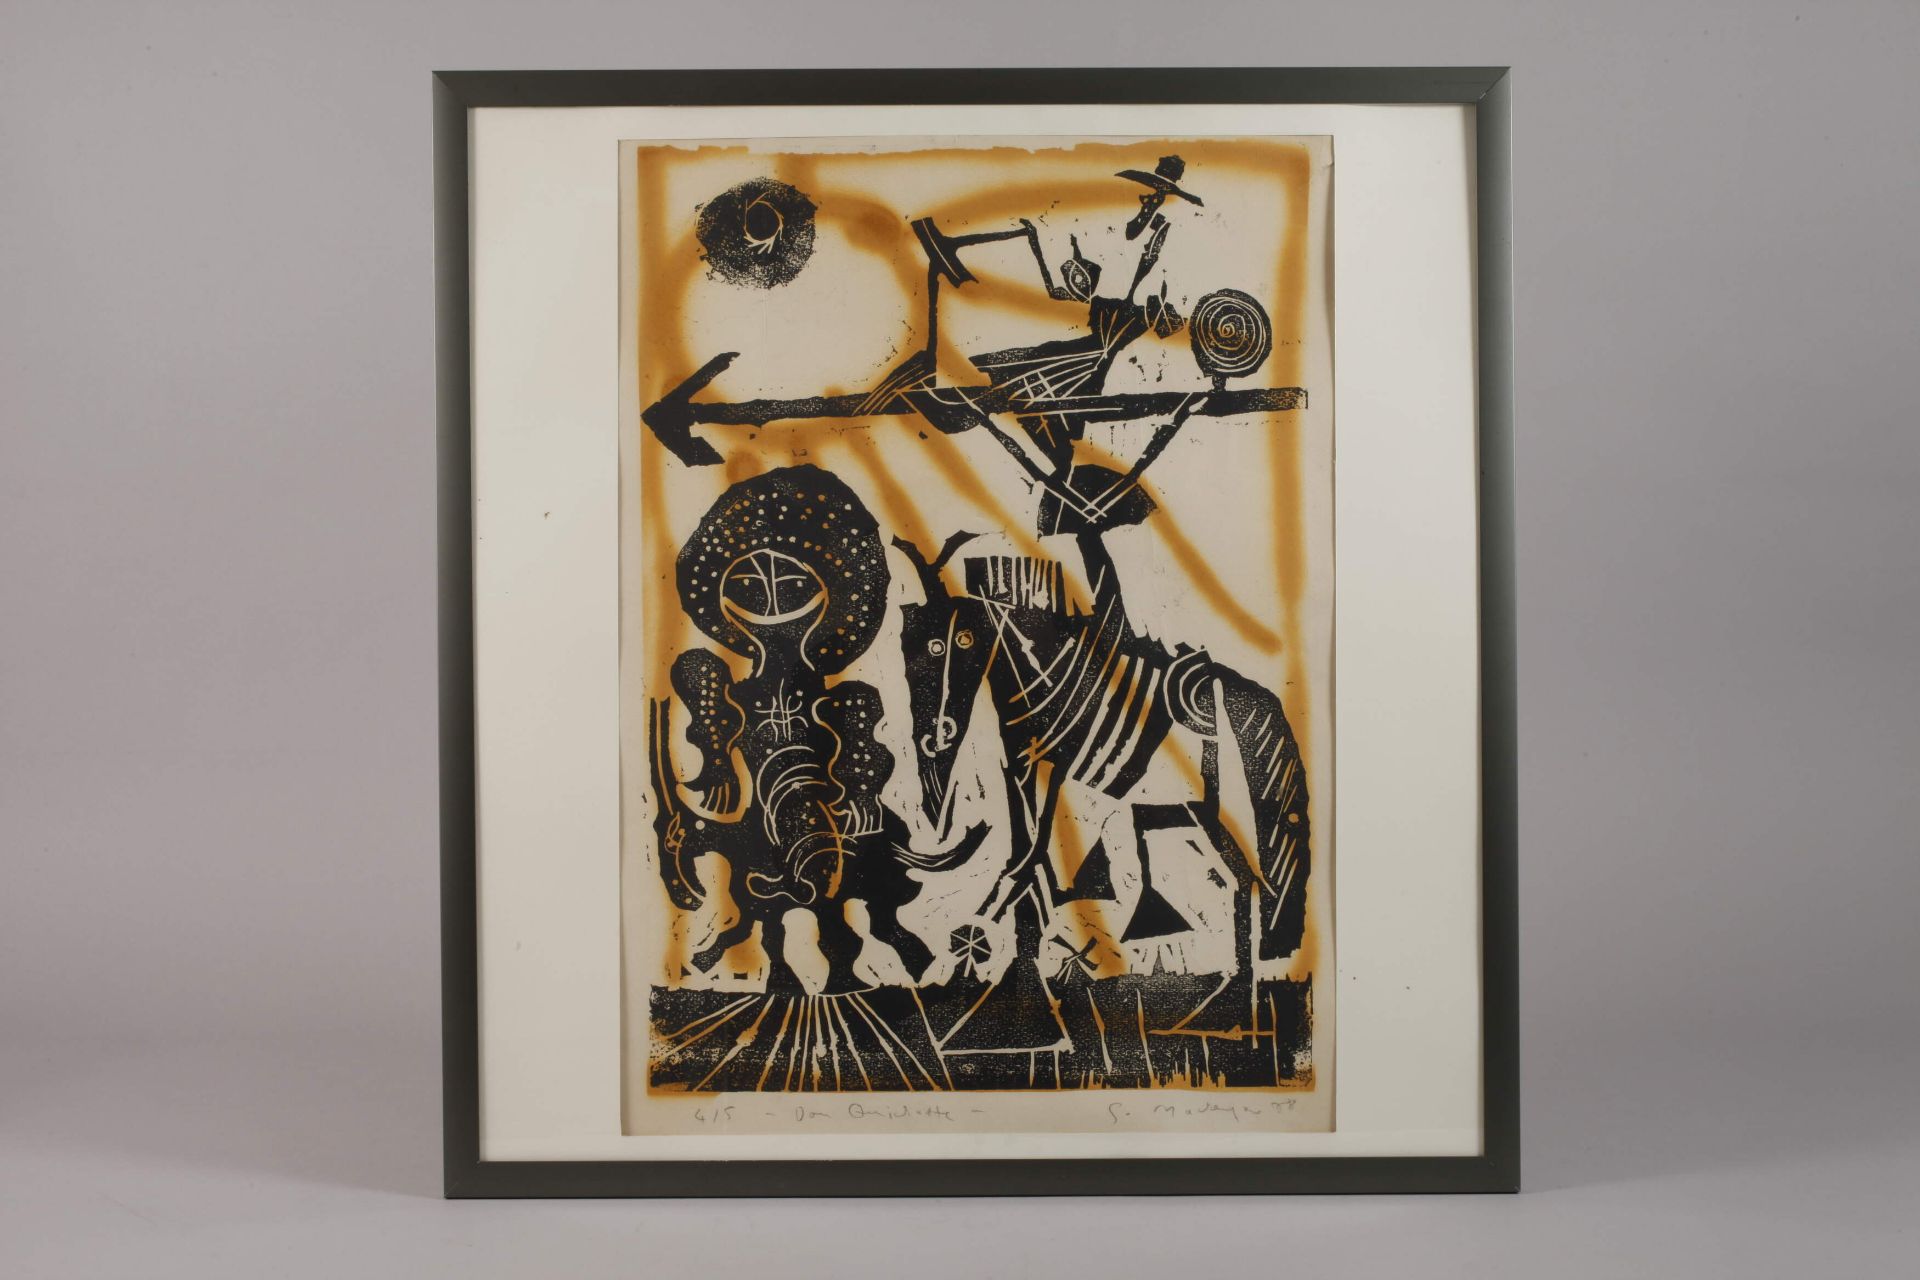 Gerd Mackensen, "Don Quixote" - Image 2 of 3